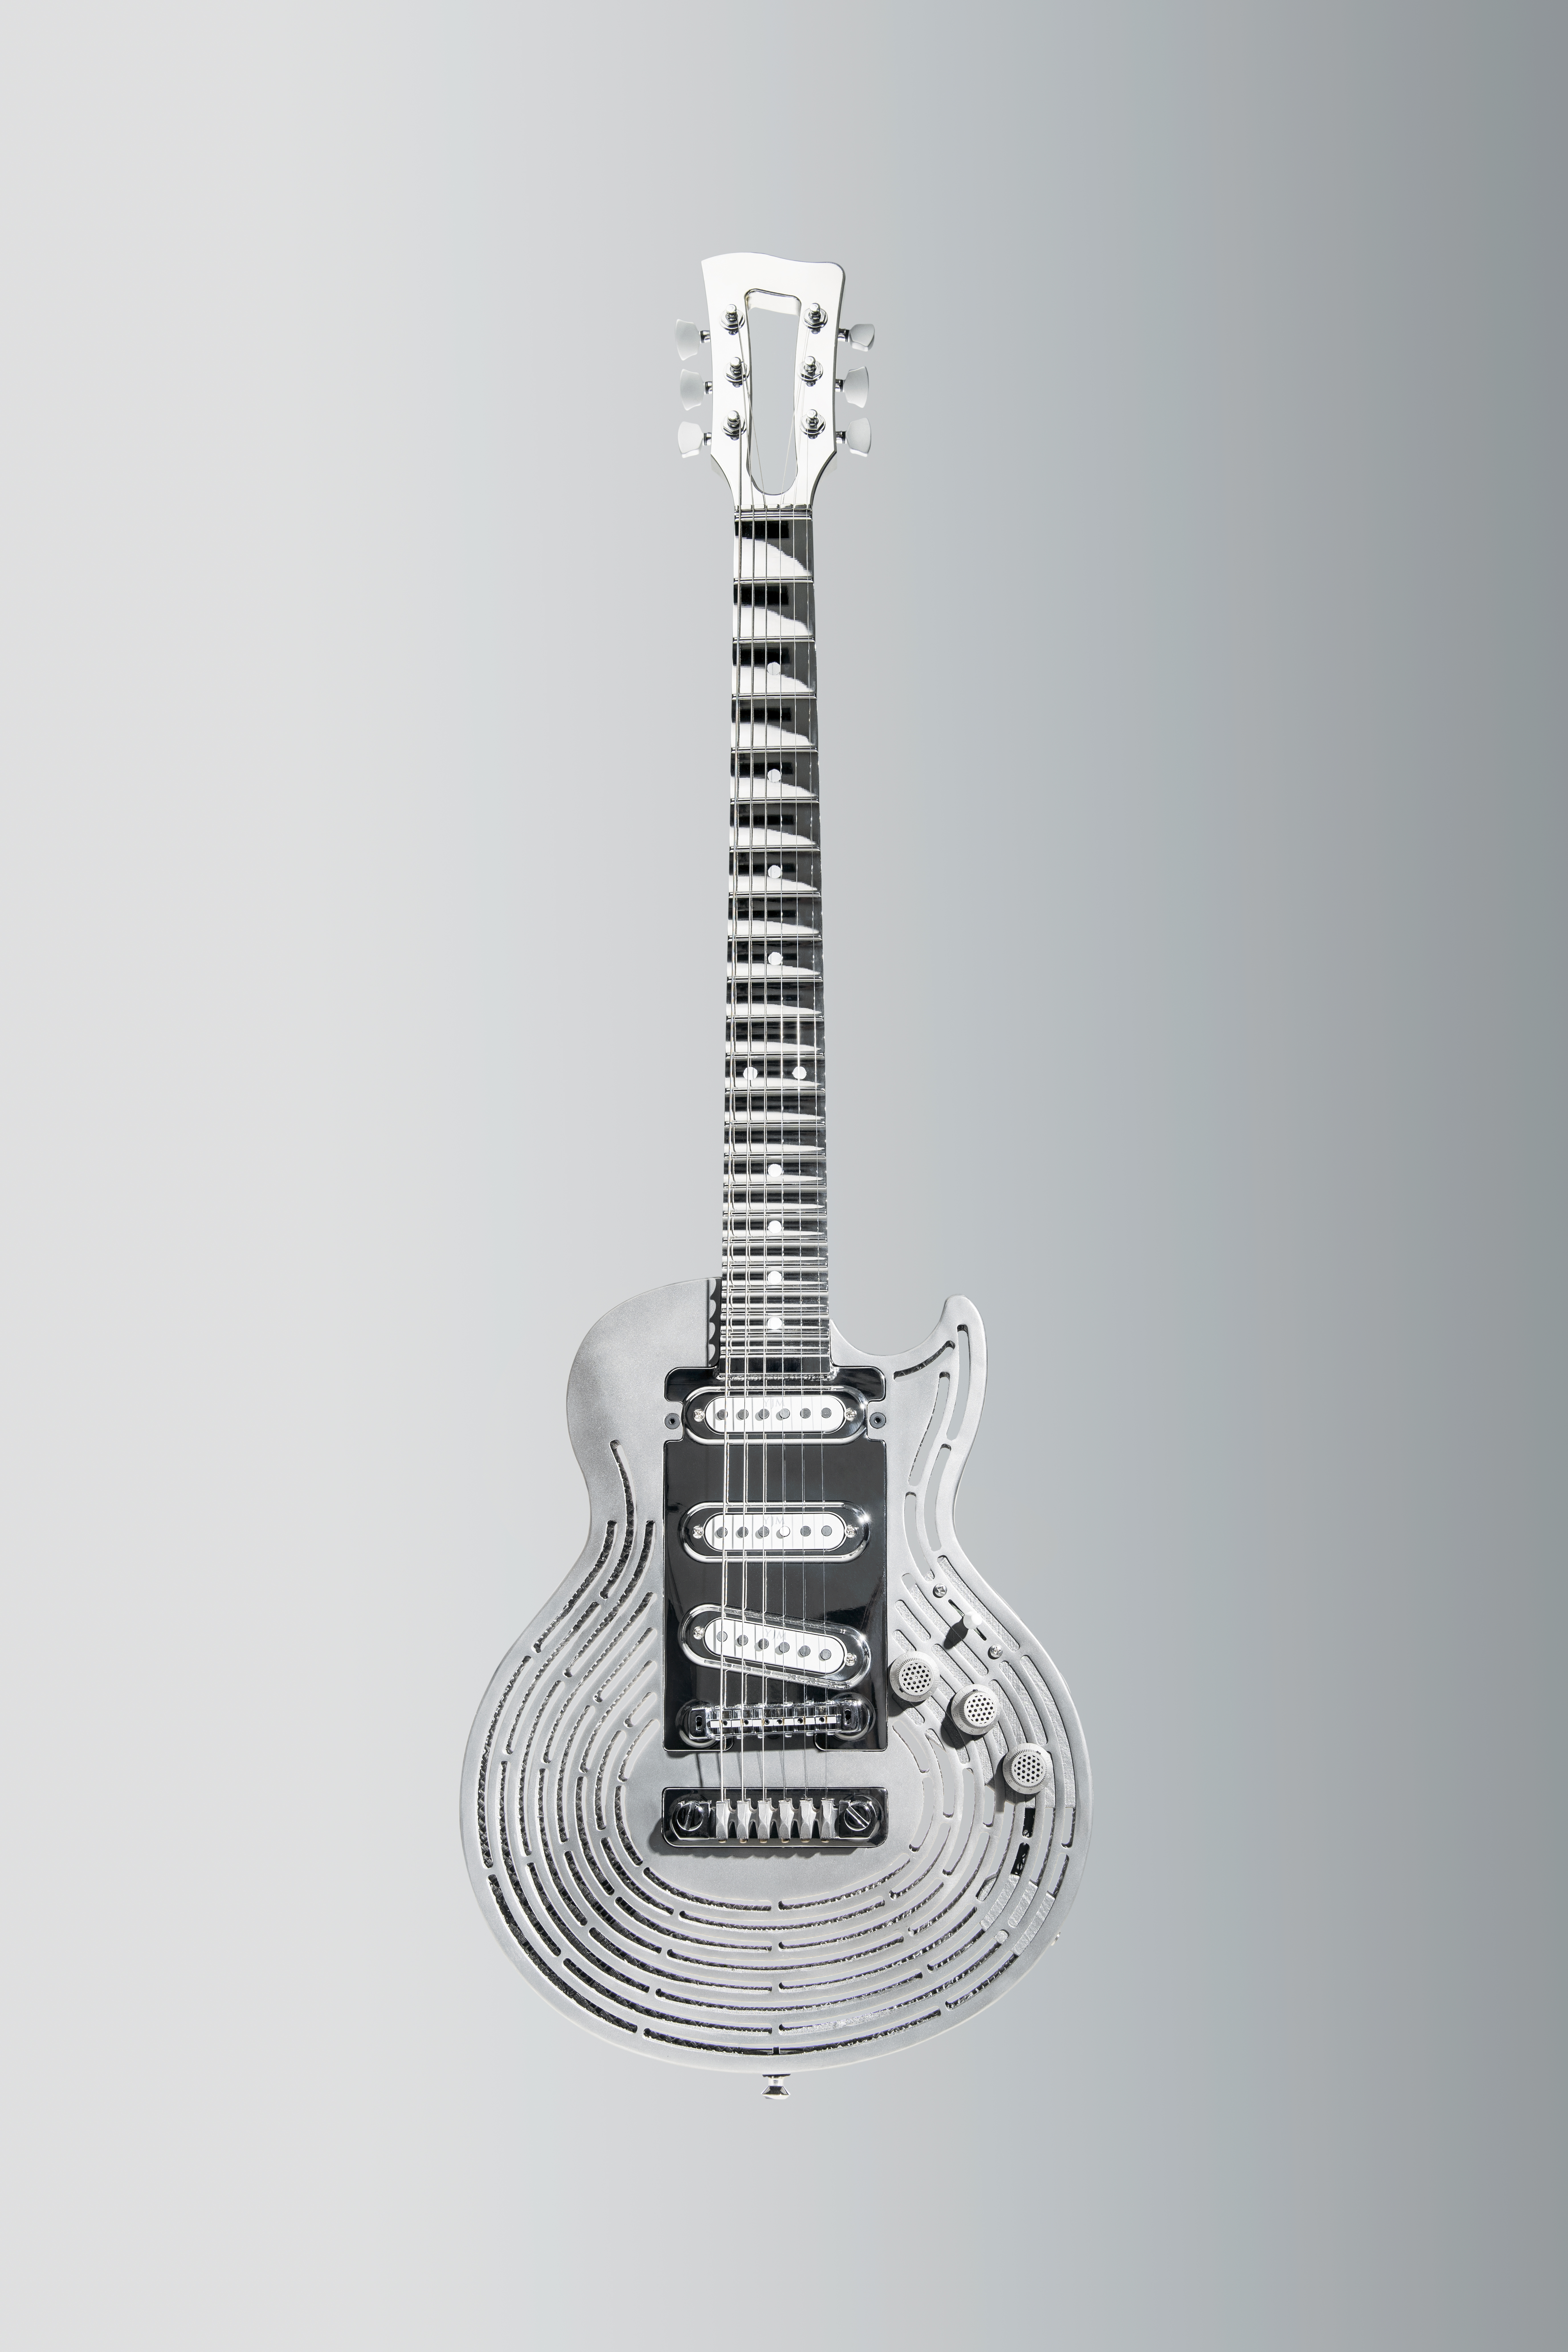 Sandvik's smash-proof 3D printed guitar. Image via Sandvik.